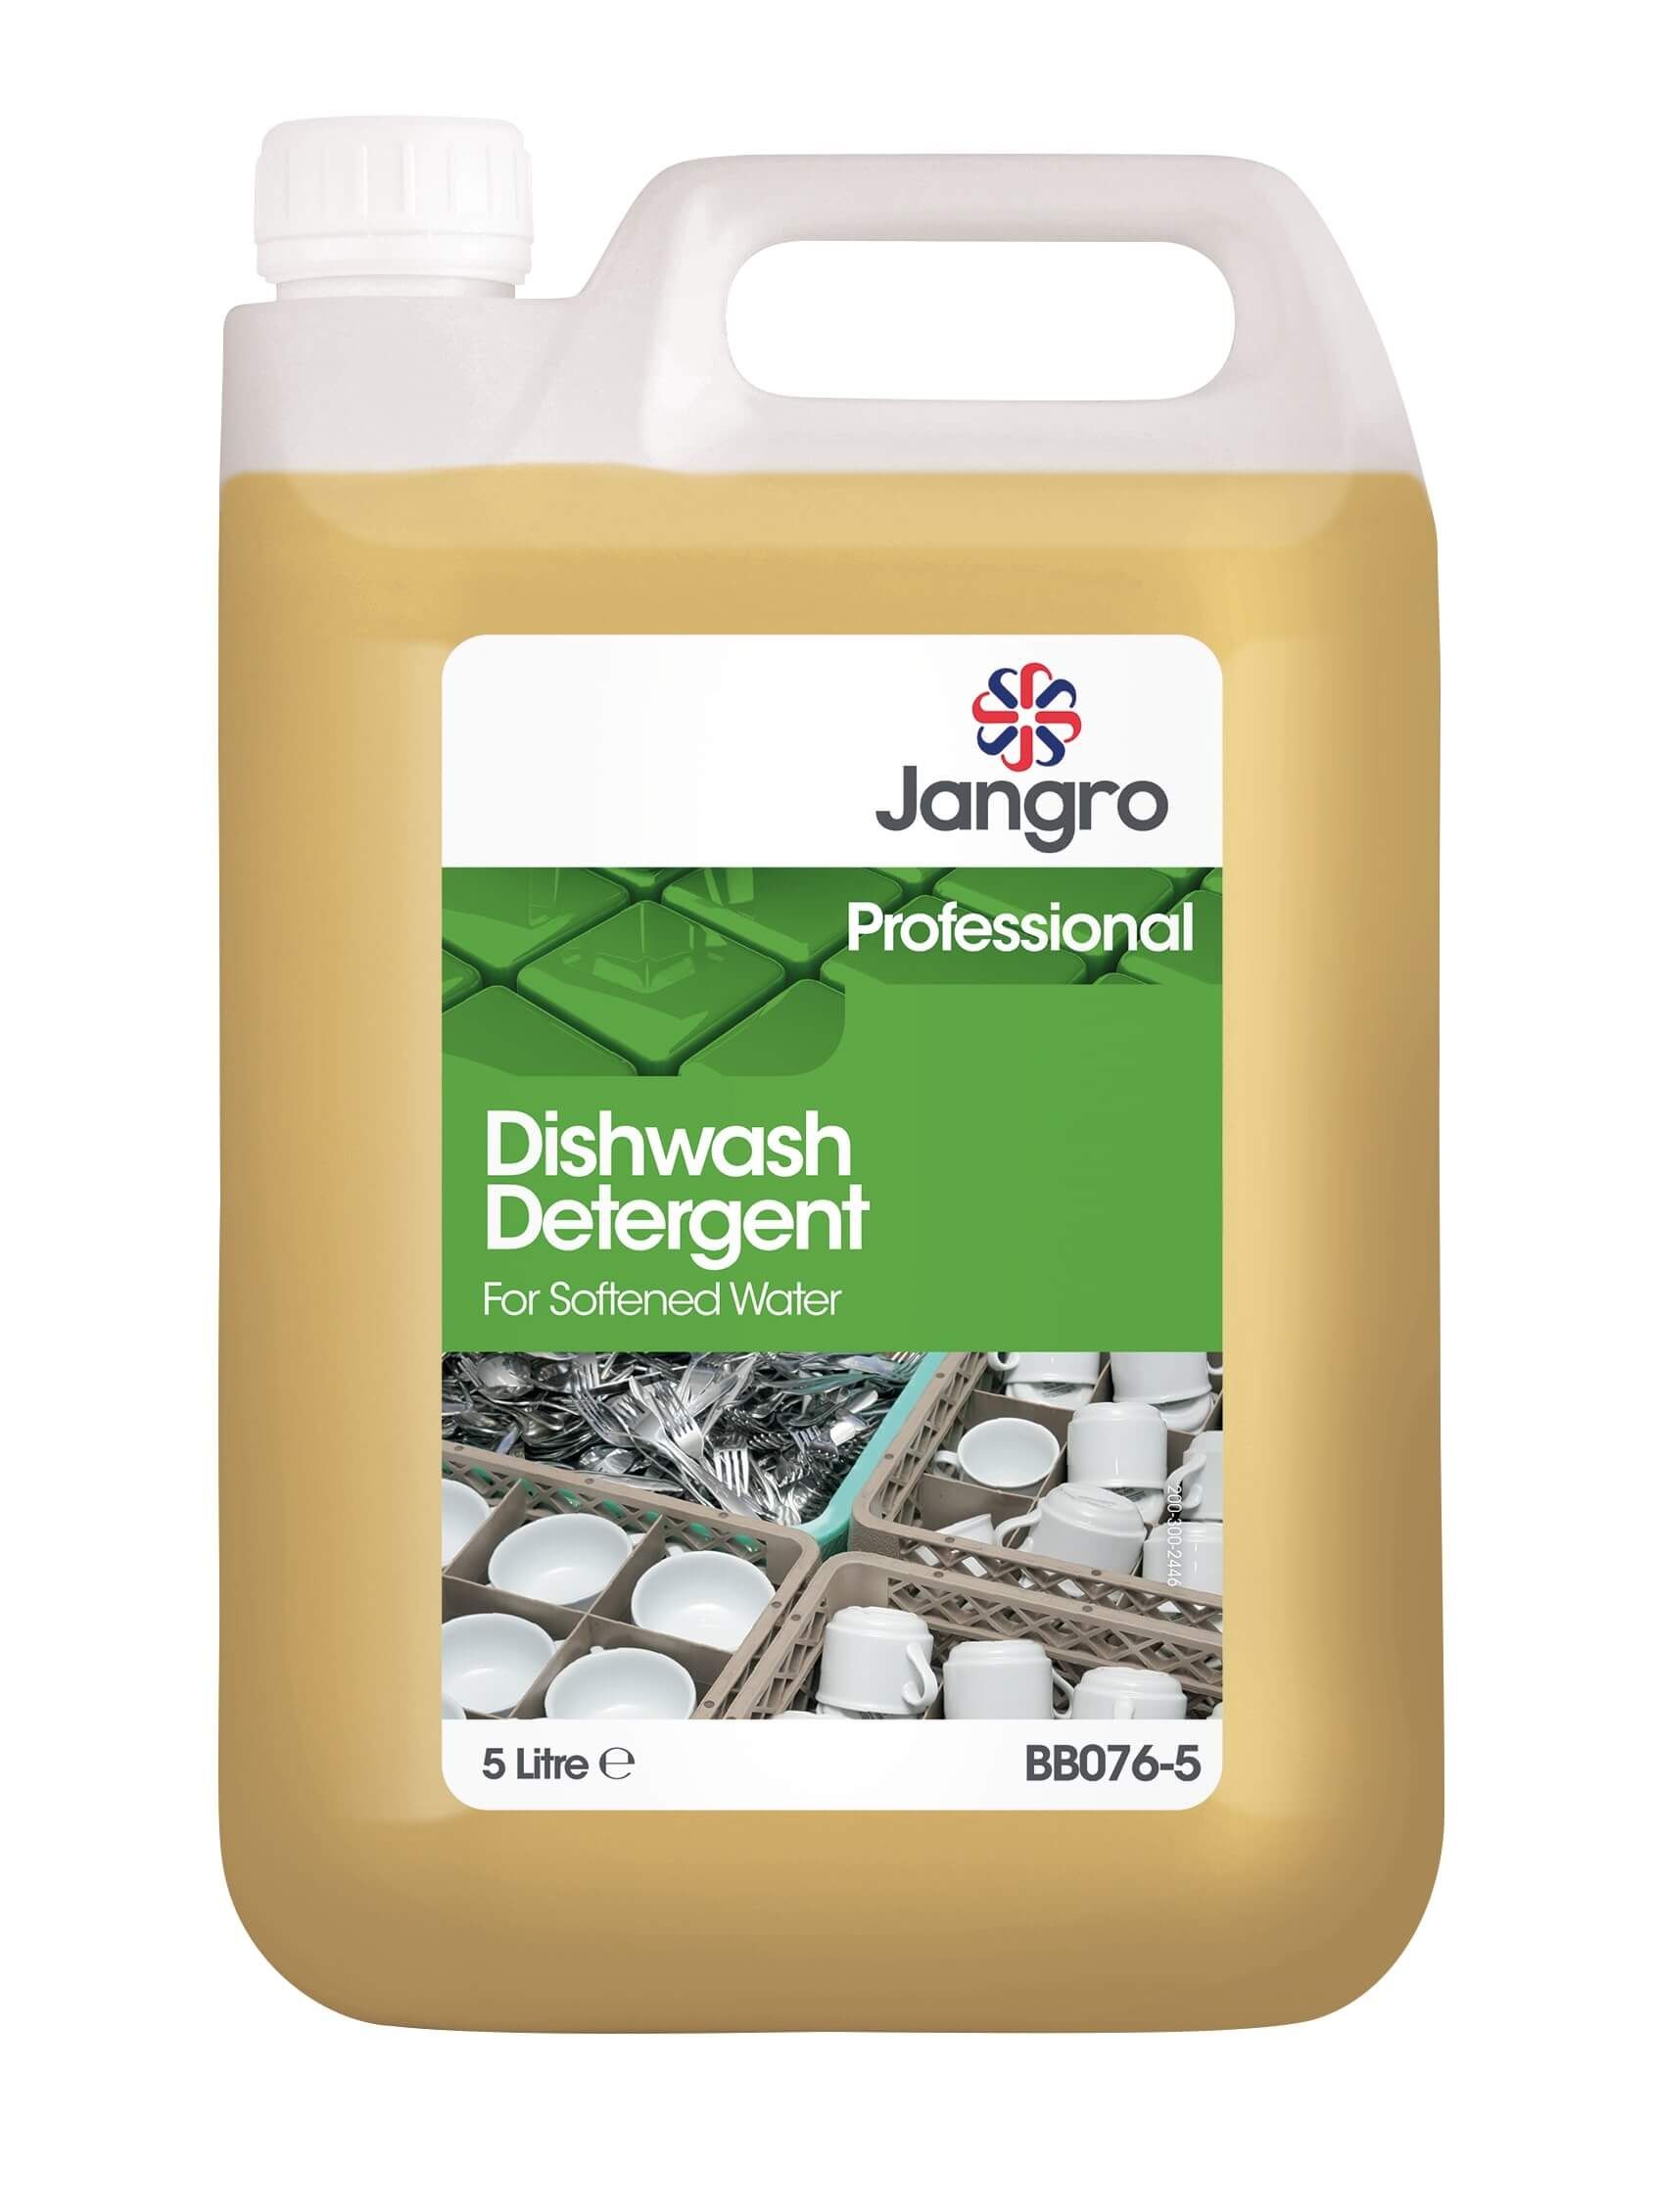 Jangro Dishwasher Detergent for Softened Water 5 Litre